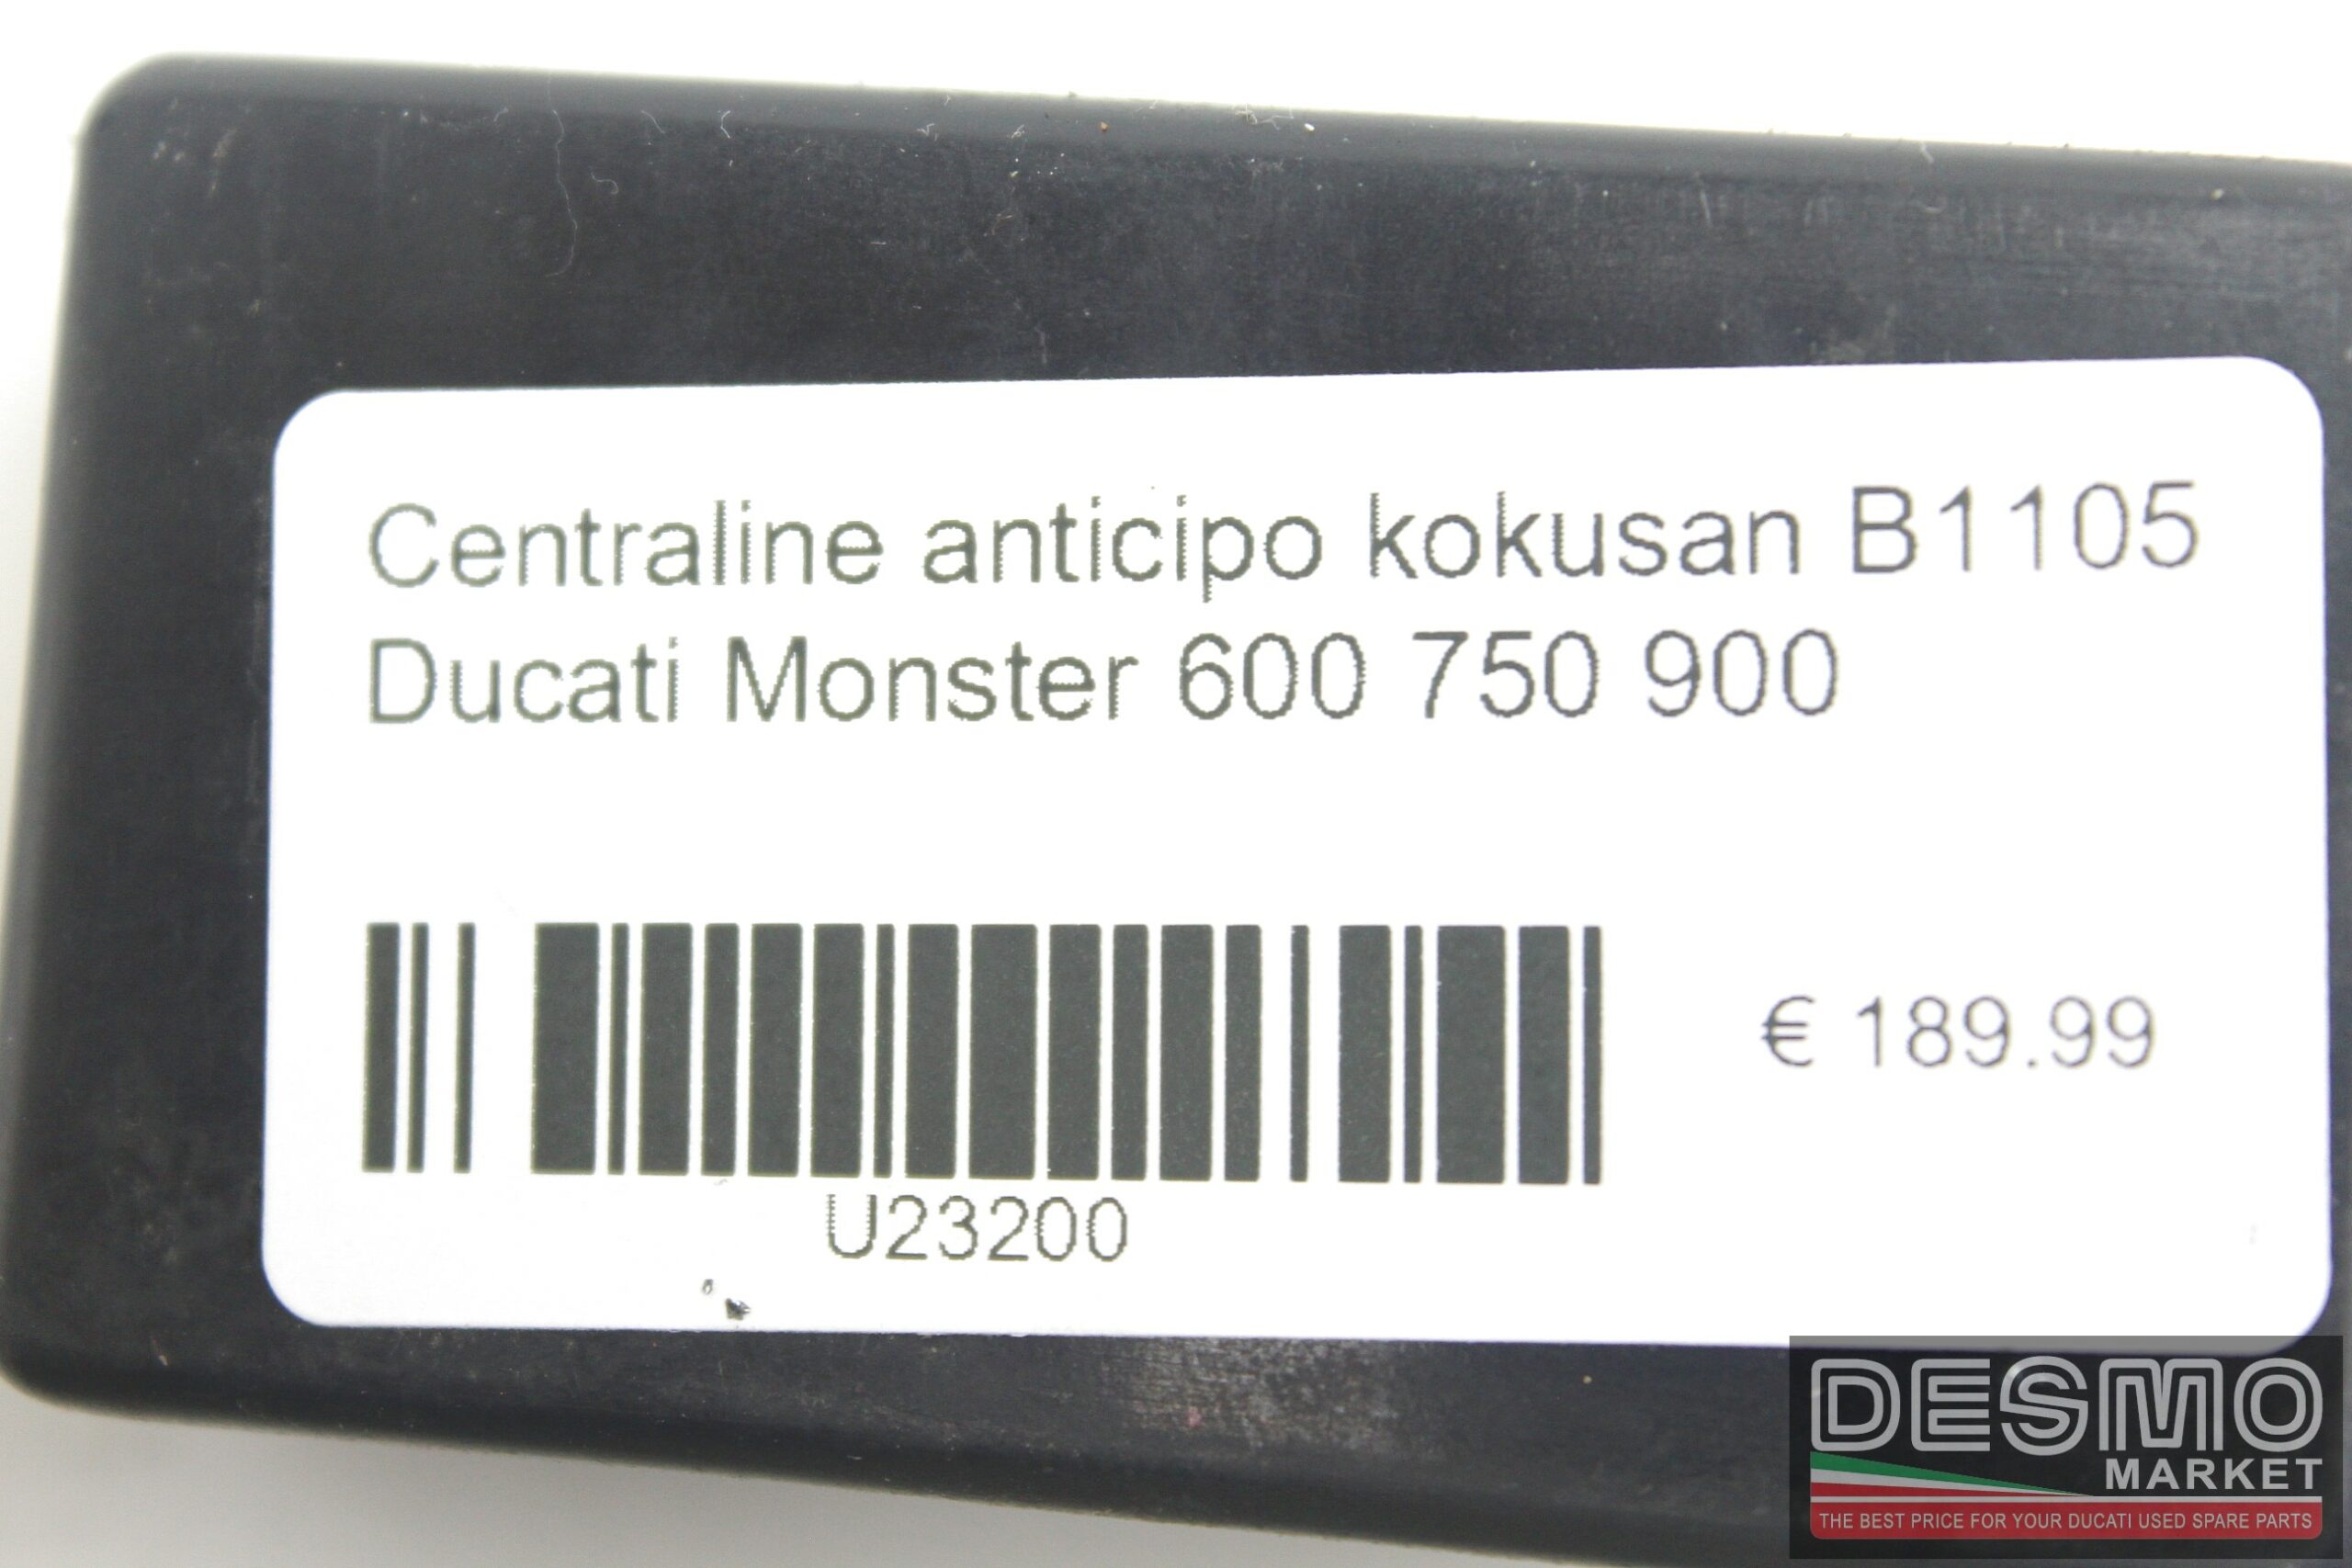 Centraline anticipo kokusan B1105 Ducati Monster 600 750 900